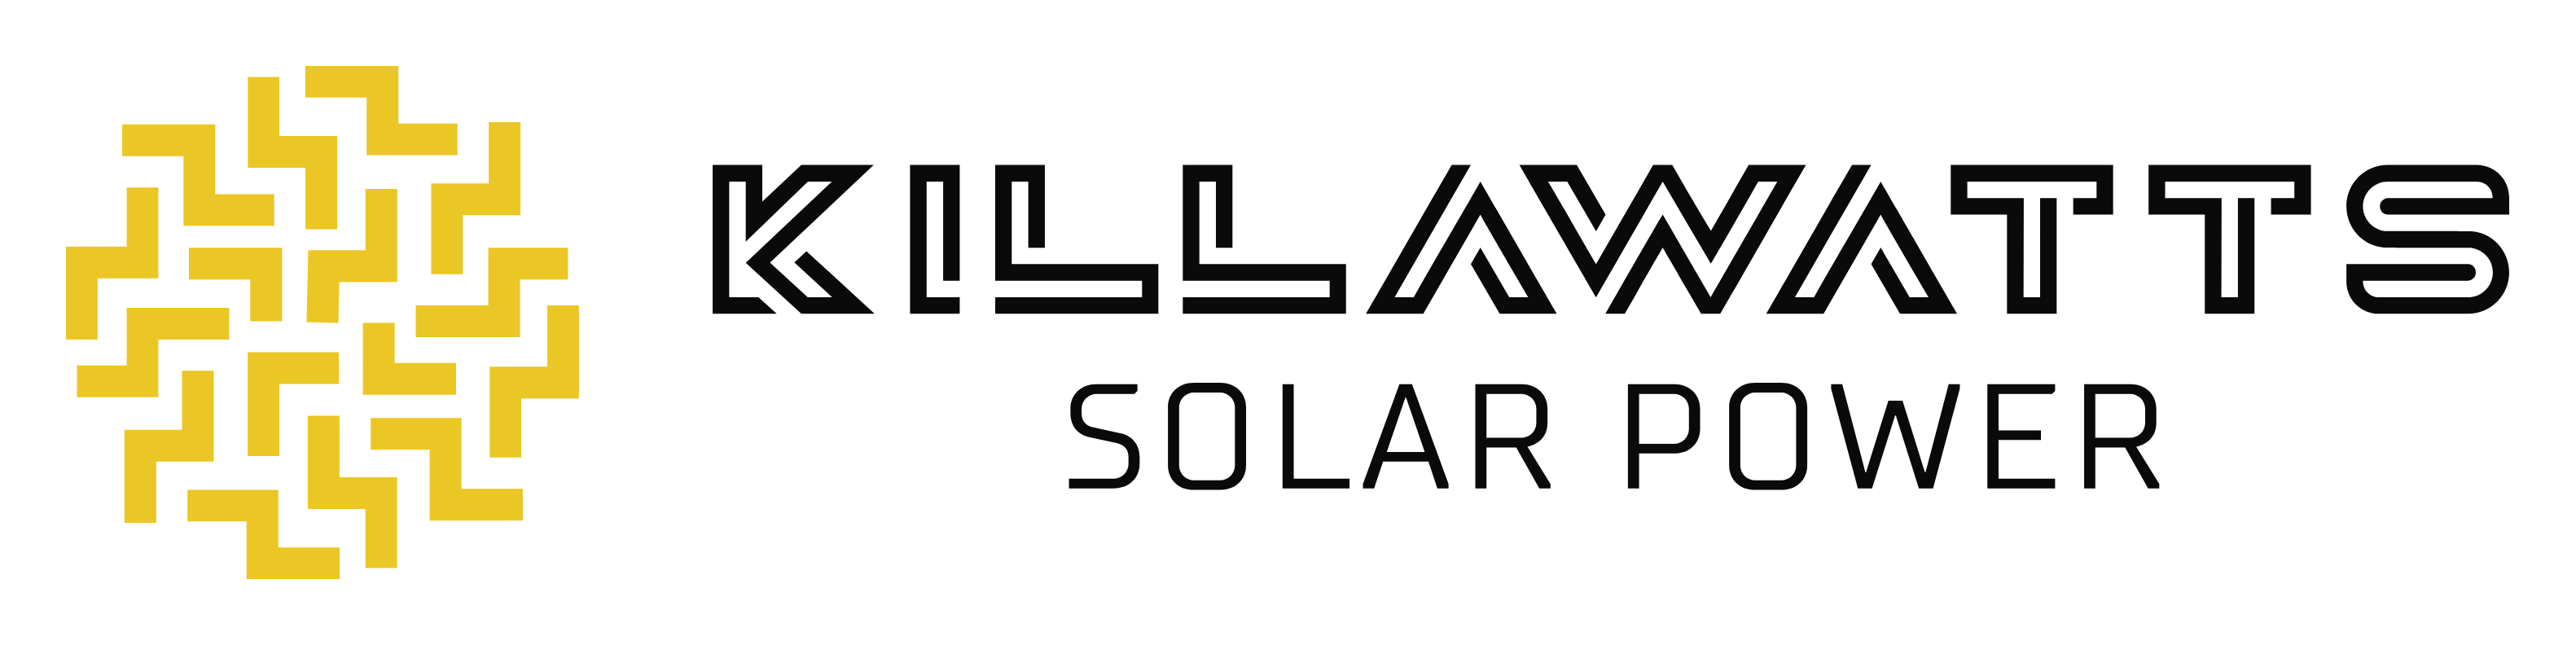 KillaWatts Solar Power